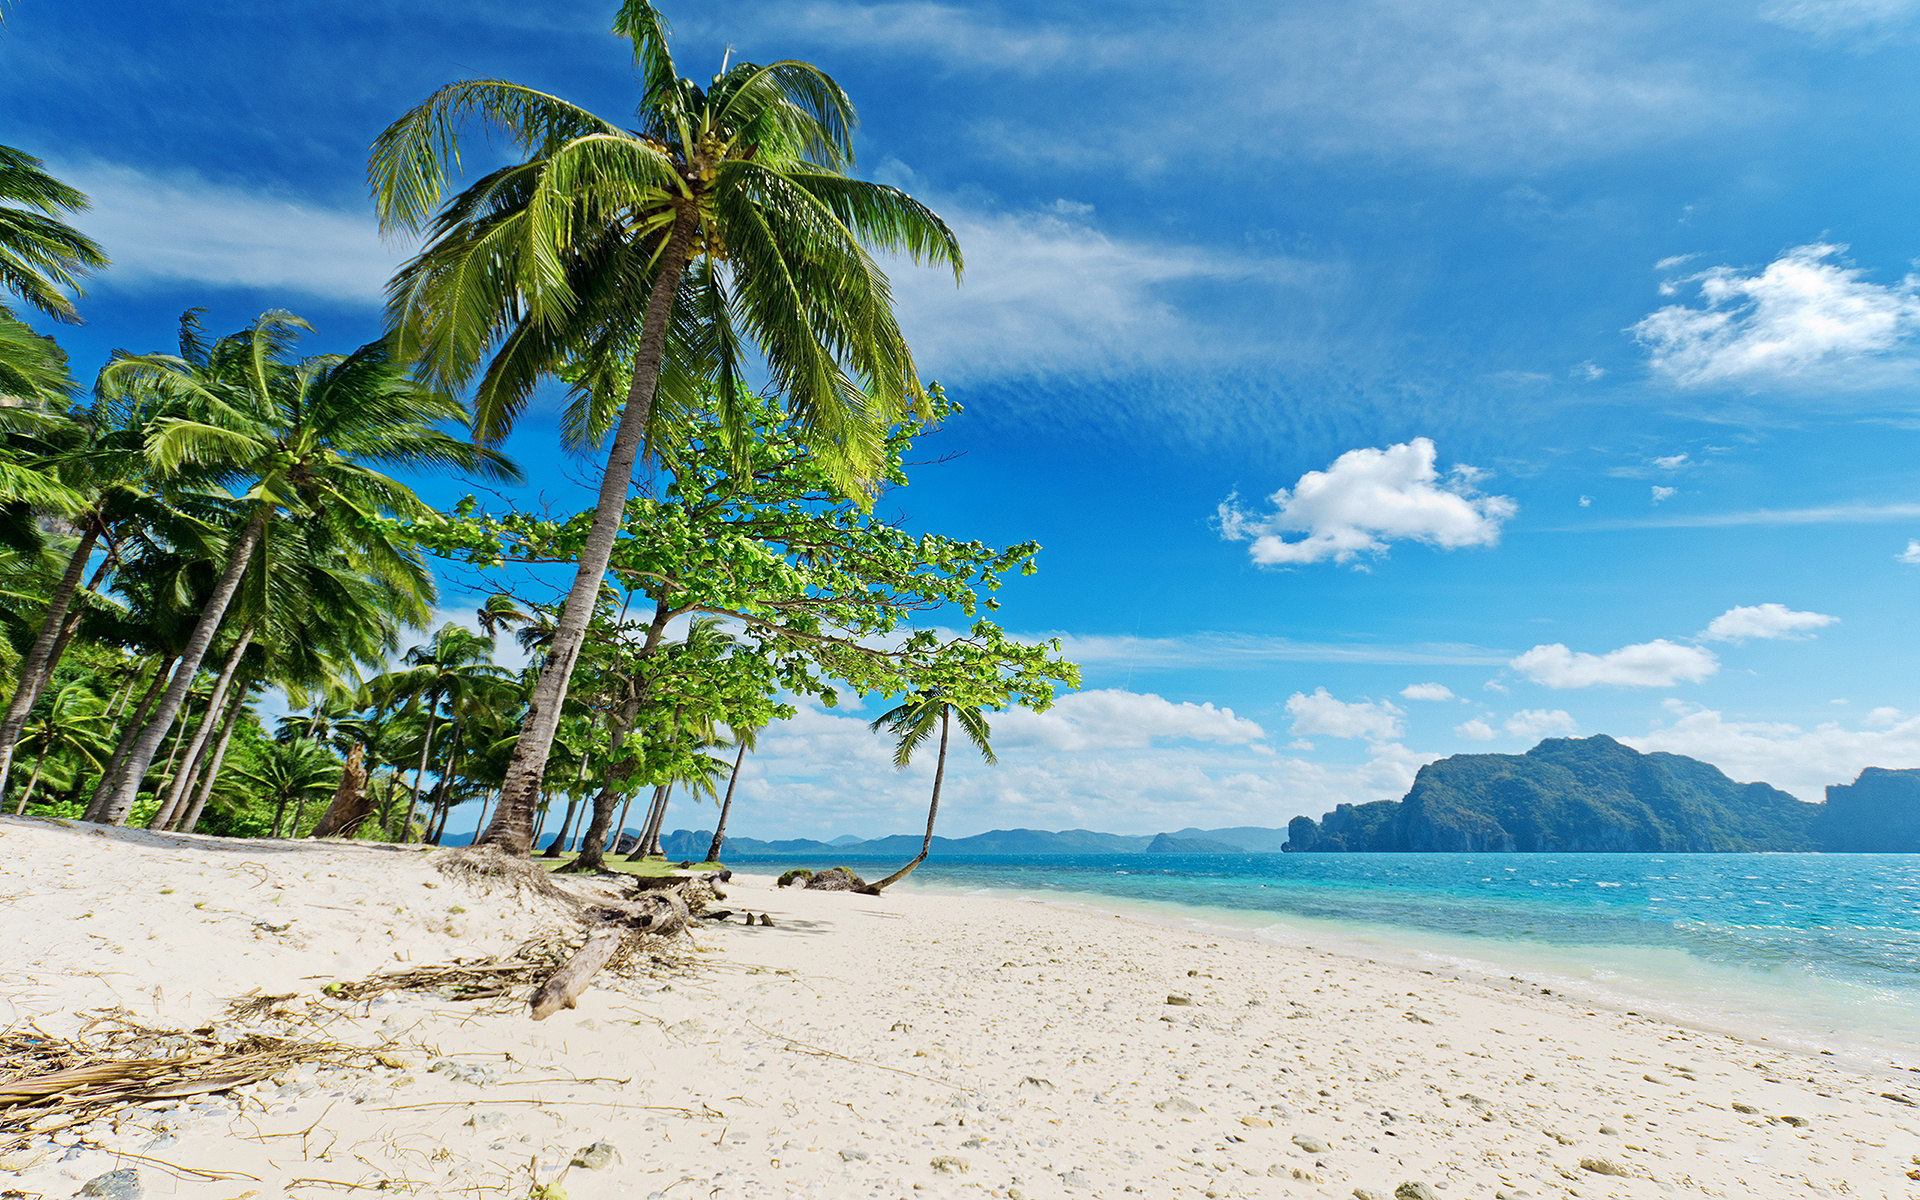 HD wallpaper, Tropical Paradise, Desktop Hd Tonga Background Photo, Beach Beauty, 1920X1200 Hd Desktop, Tonga Travels, Sunny Beaches